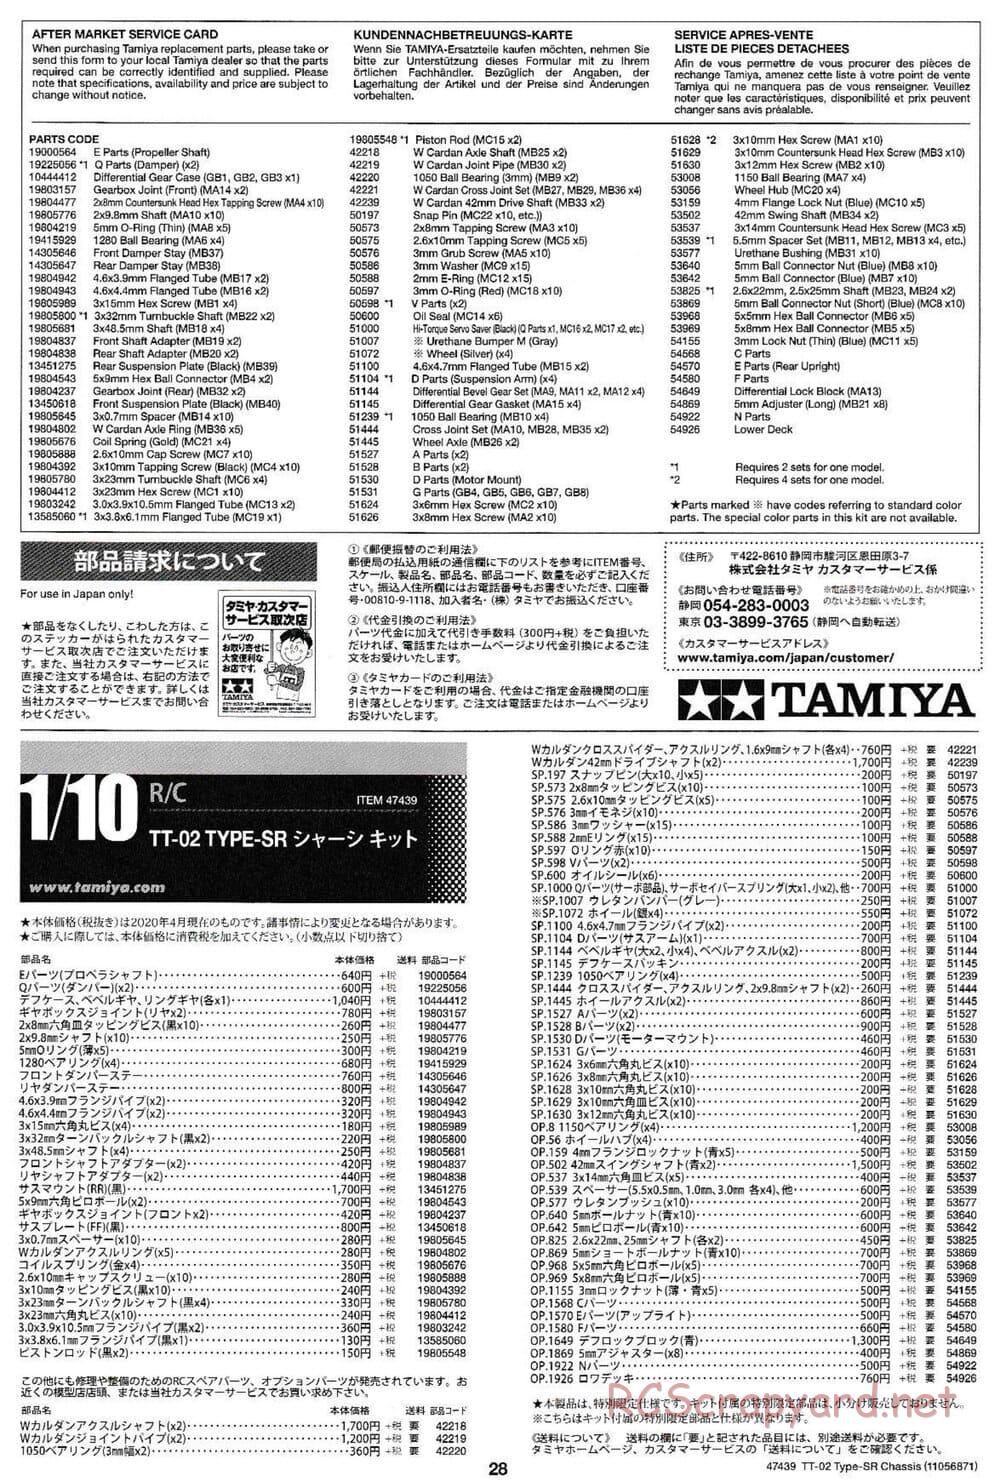 Tamiya - TT-02 Type-SR Chassis - Manual - Page 28